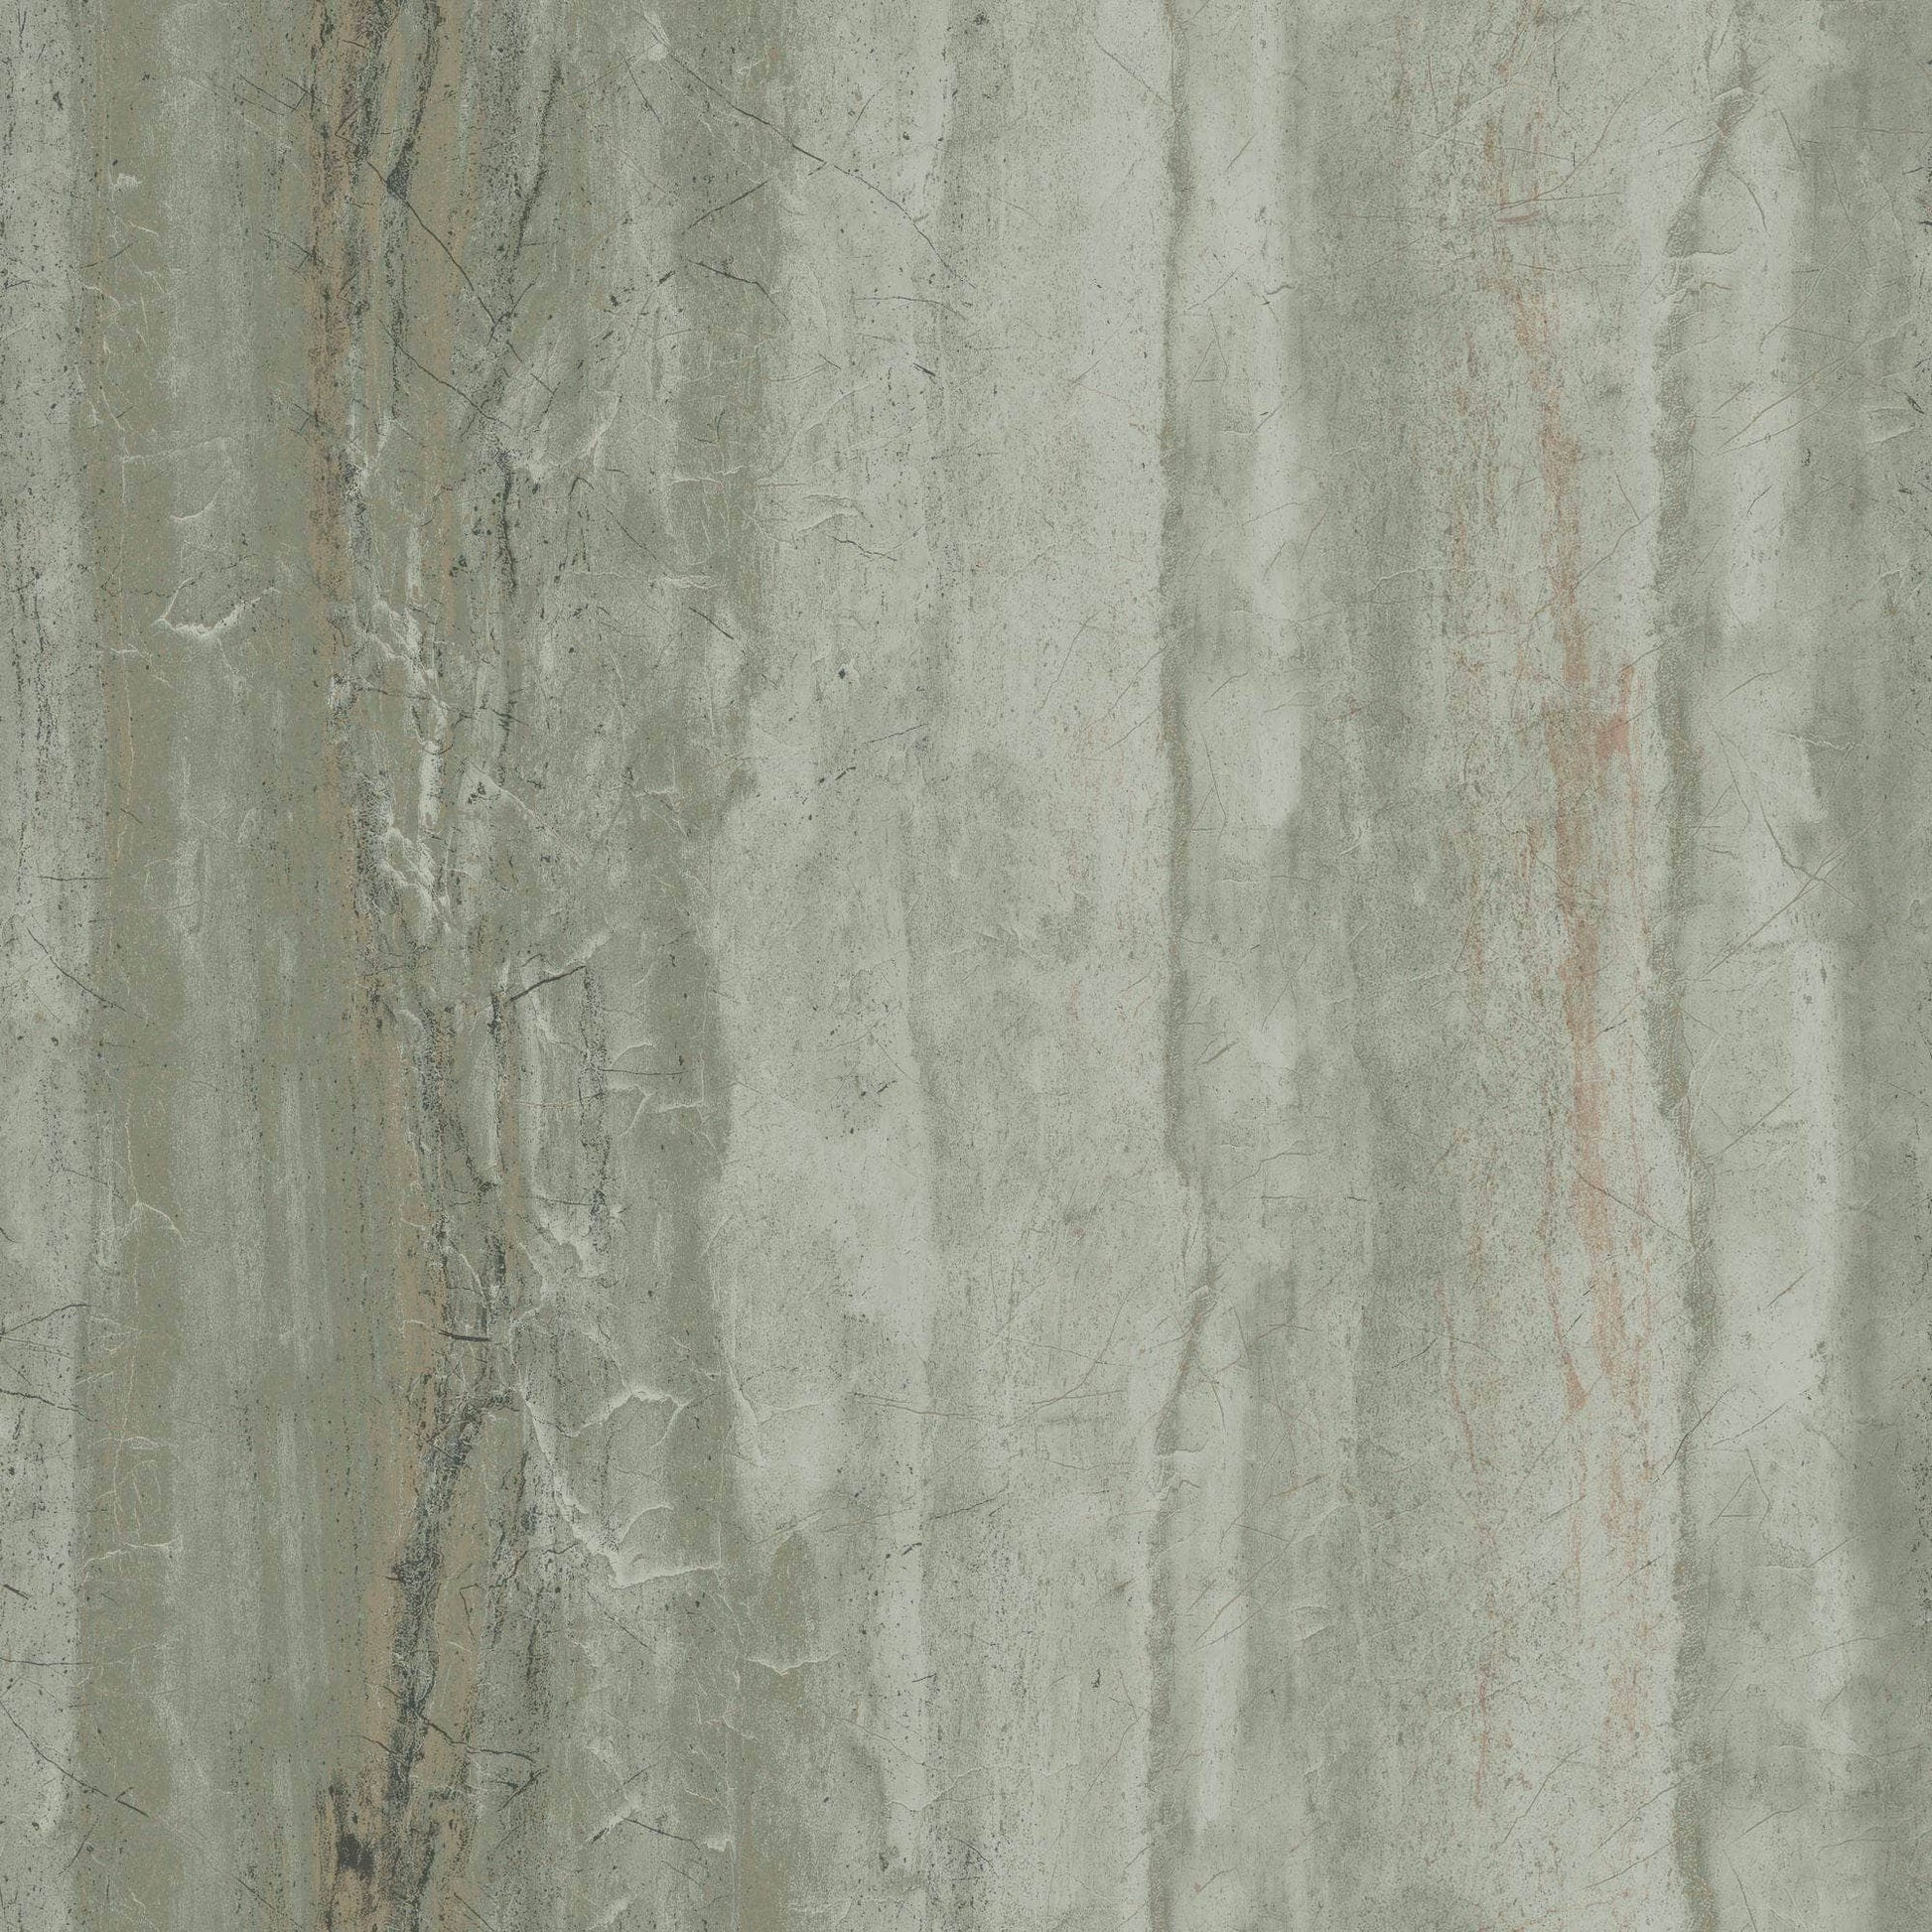 Wallpaper  -  Debona Vertical Marble Green Wallpaper - 5043  -  60009442